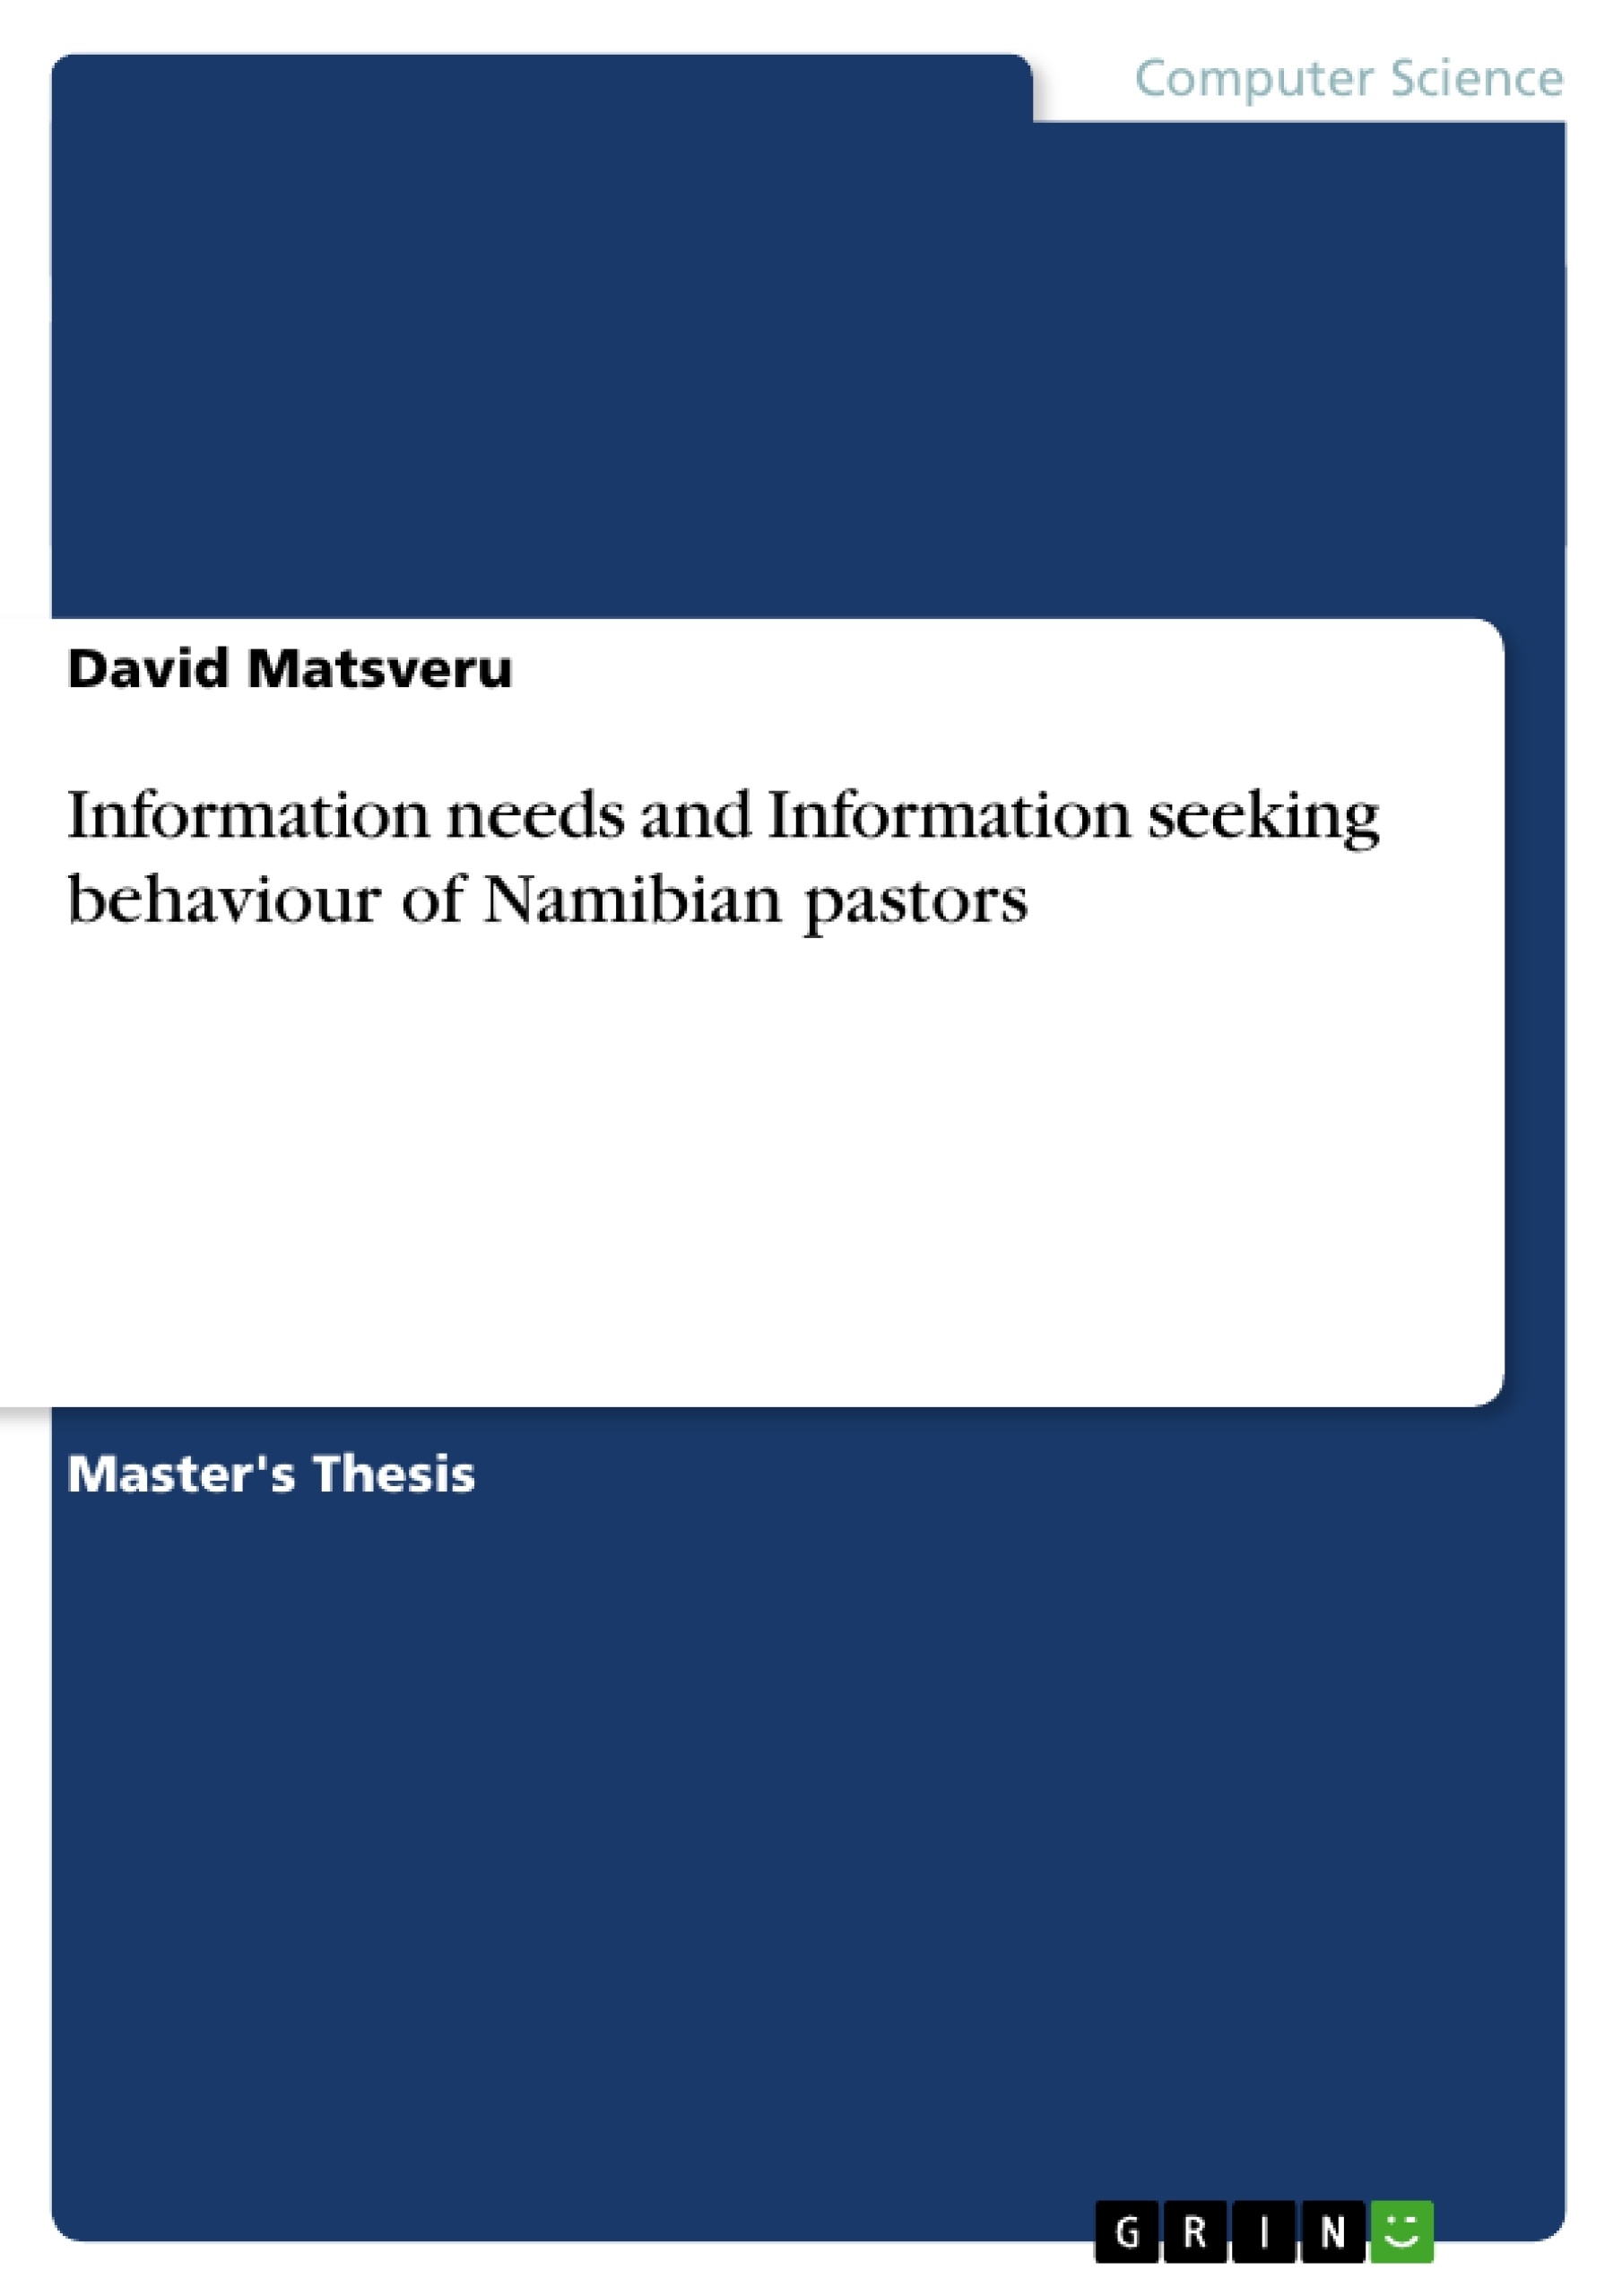 Title: Information needs and Information seeking behaviour of Namibian pastors